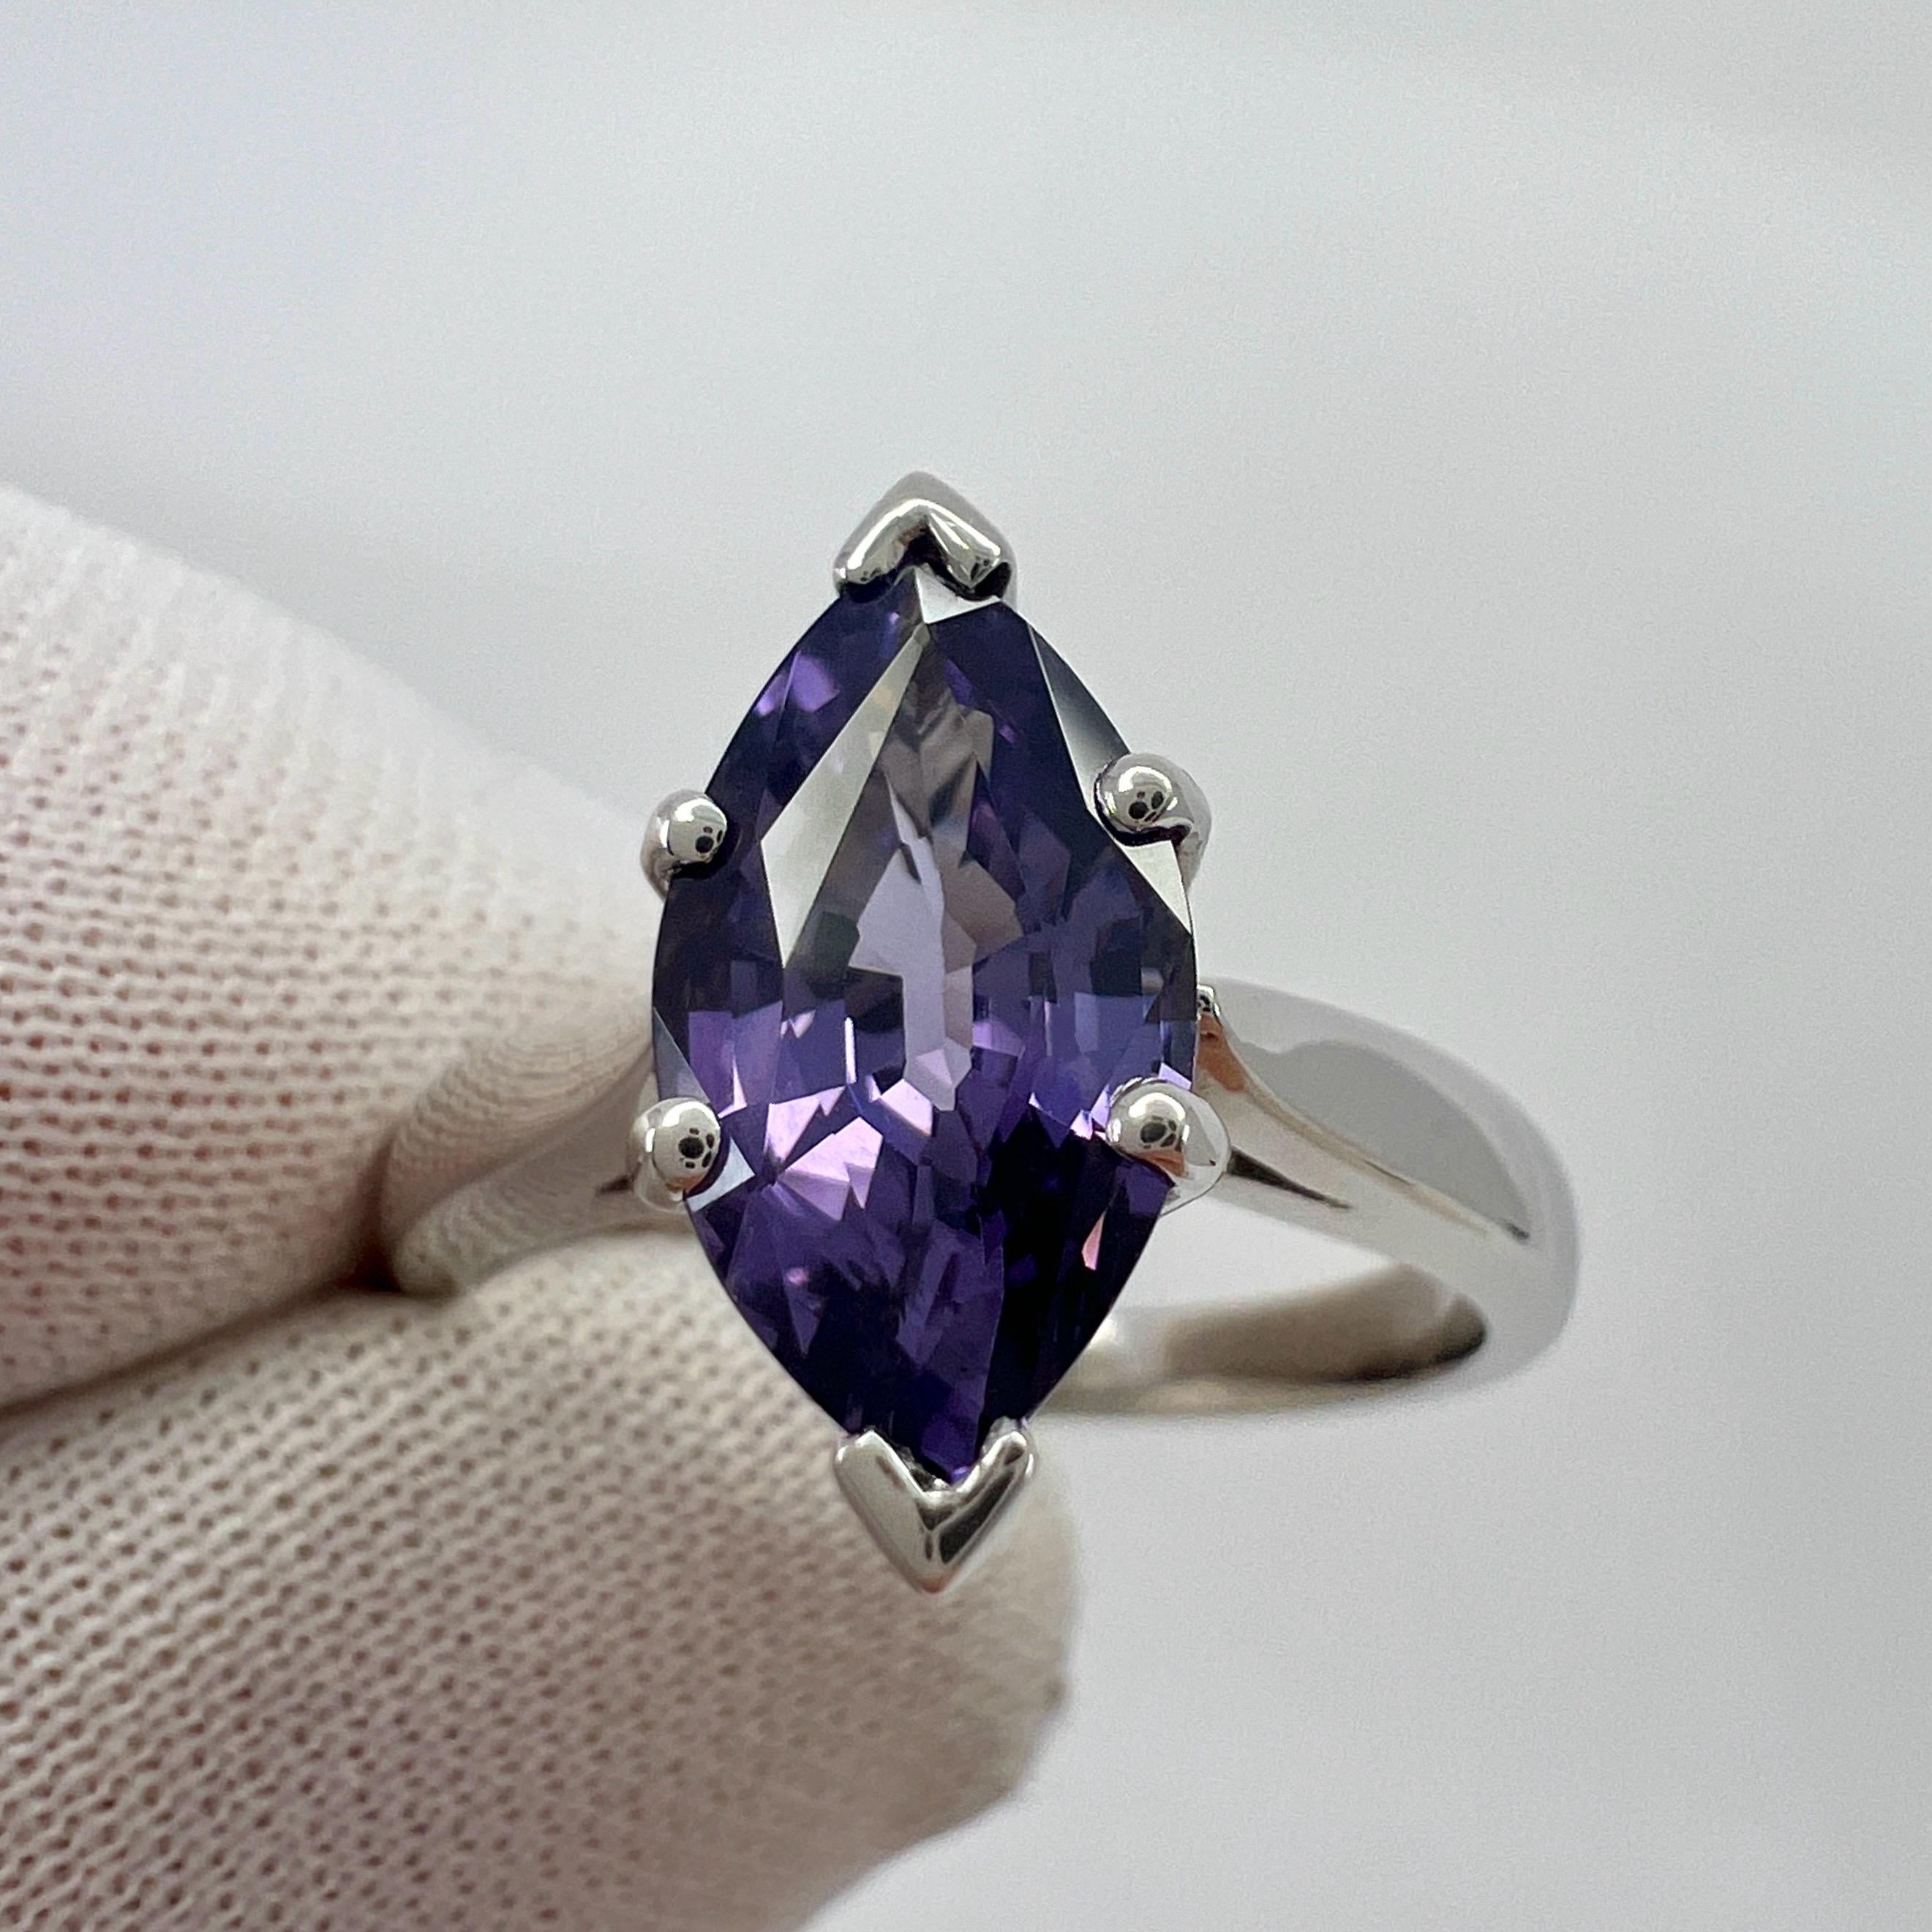 Unique 2.13ct Vivid Purple Violet Spinel Marquise 18k White Gold Solitaire Ring For Sale 1